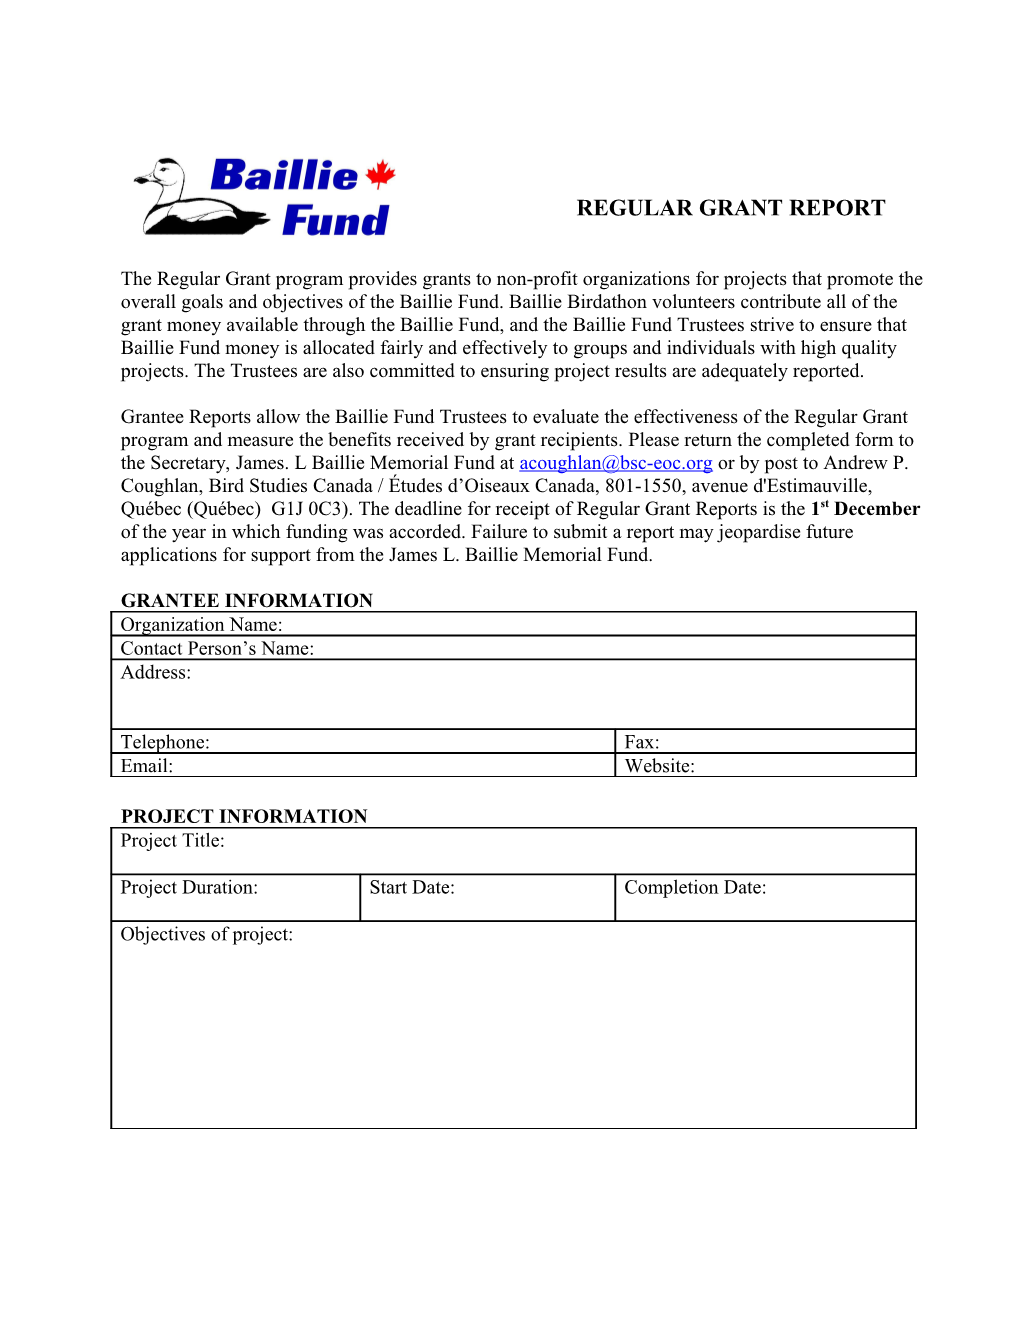 James L. Baillie Memorial Fund